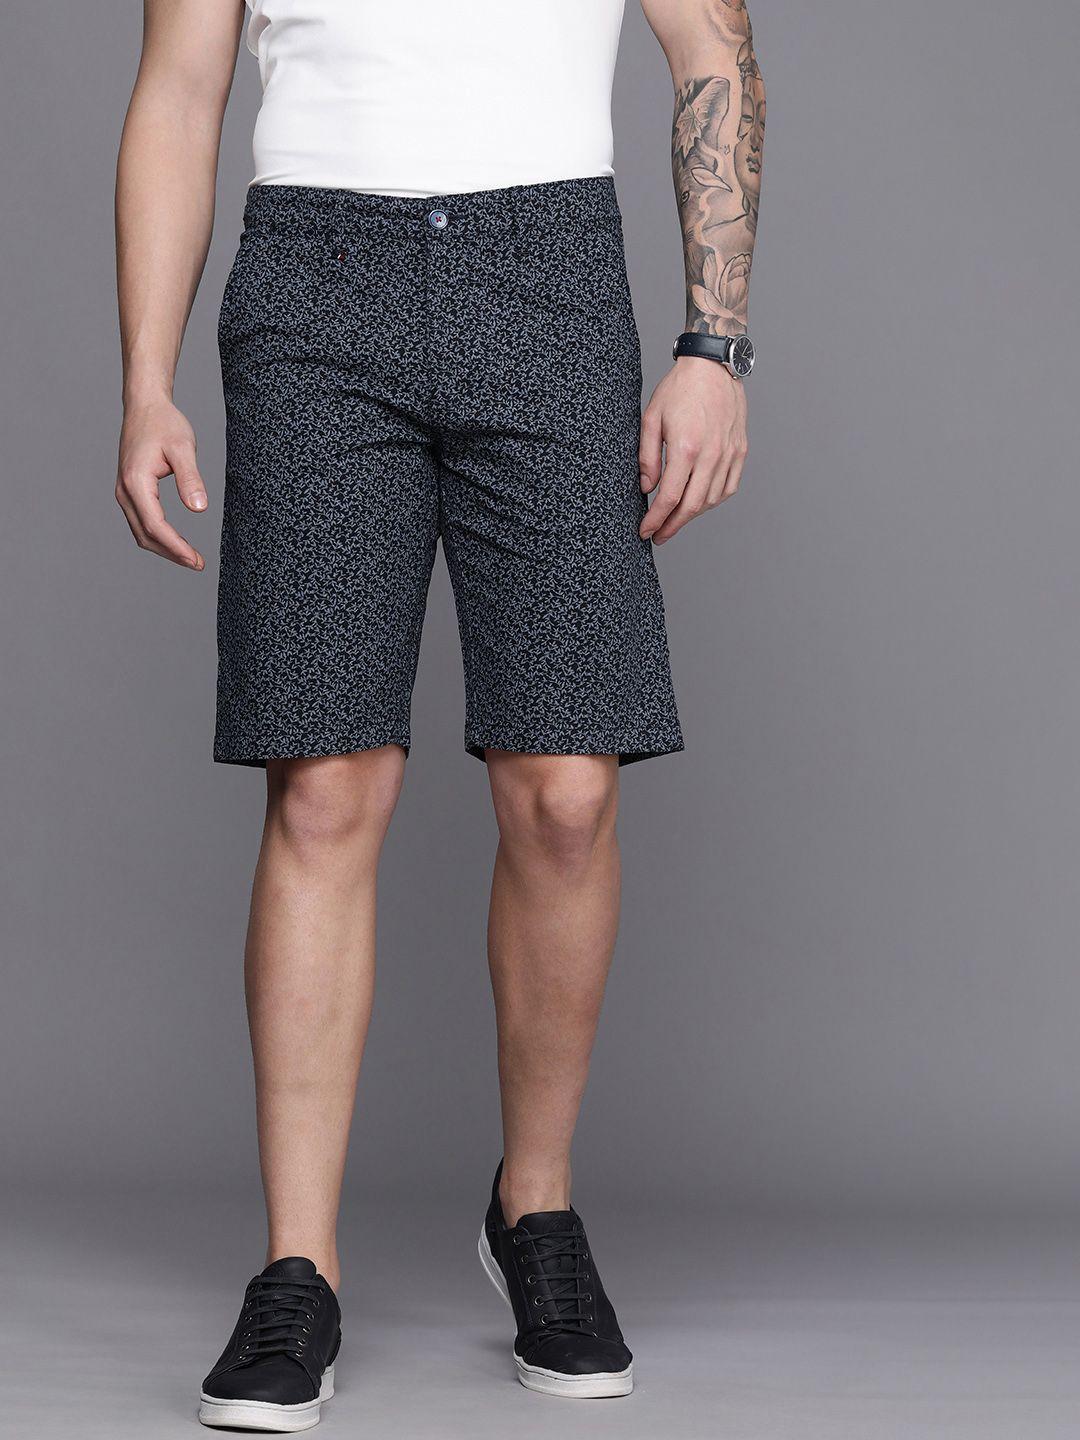 louis philippe sport men navy blue tropical printed slim fit regular shorts